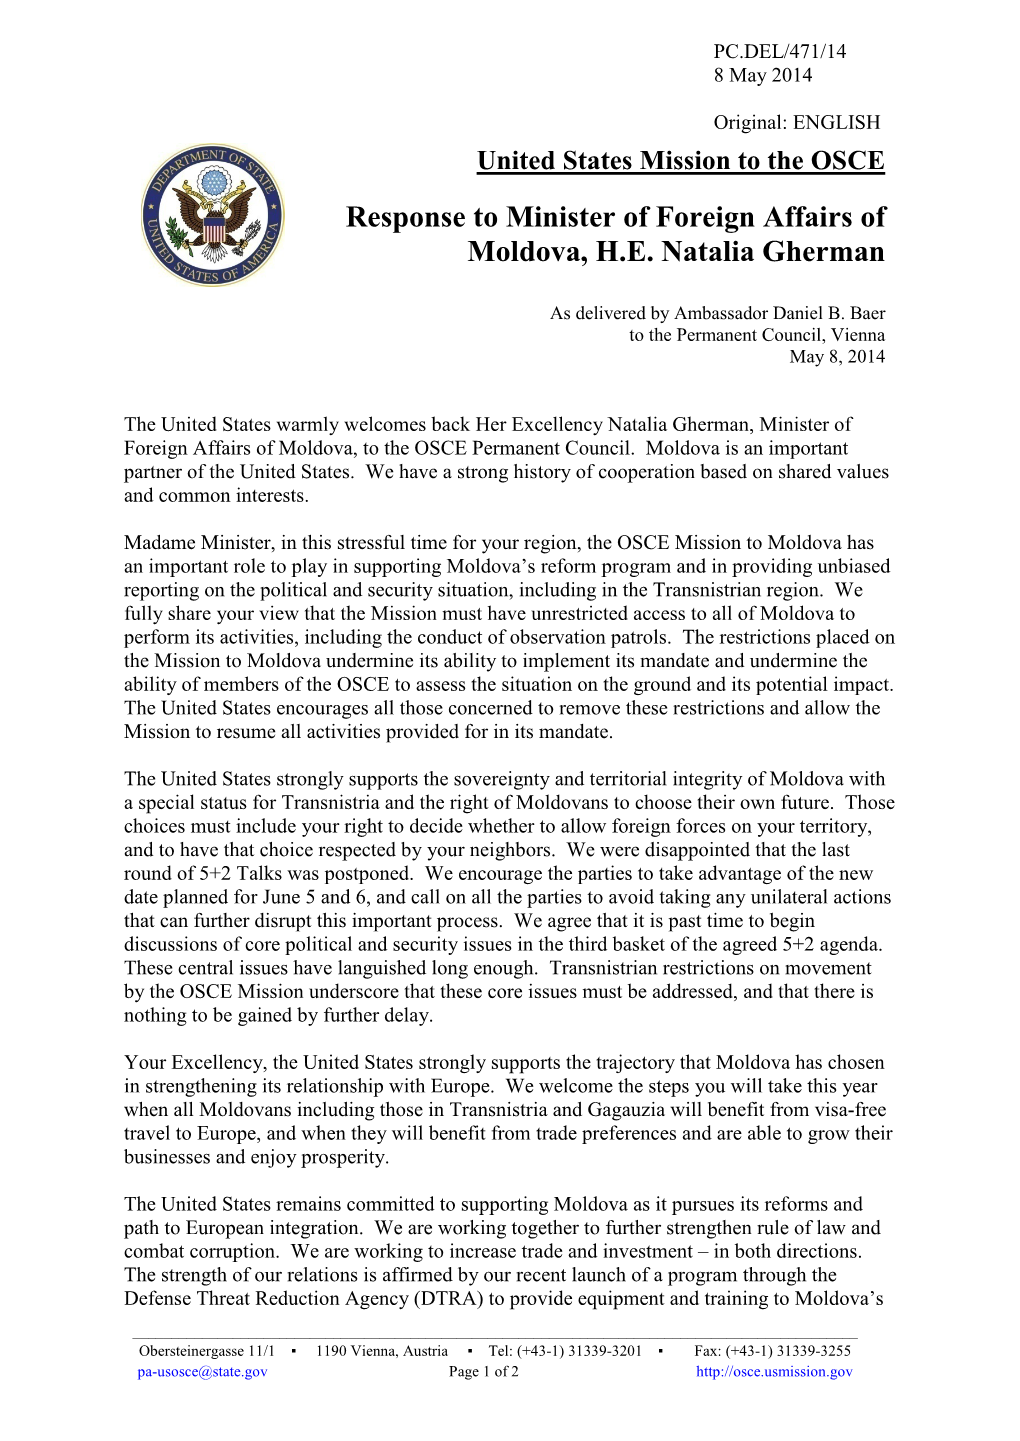 Response to Minister of Foreign Affairs of Moldova, H.E. Natalia Gherman